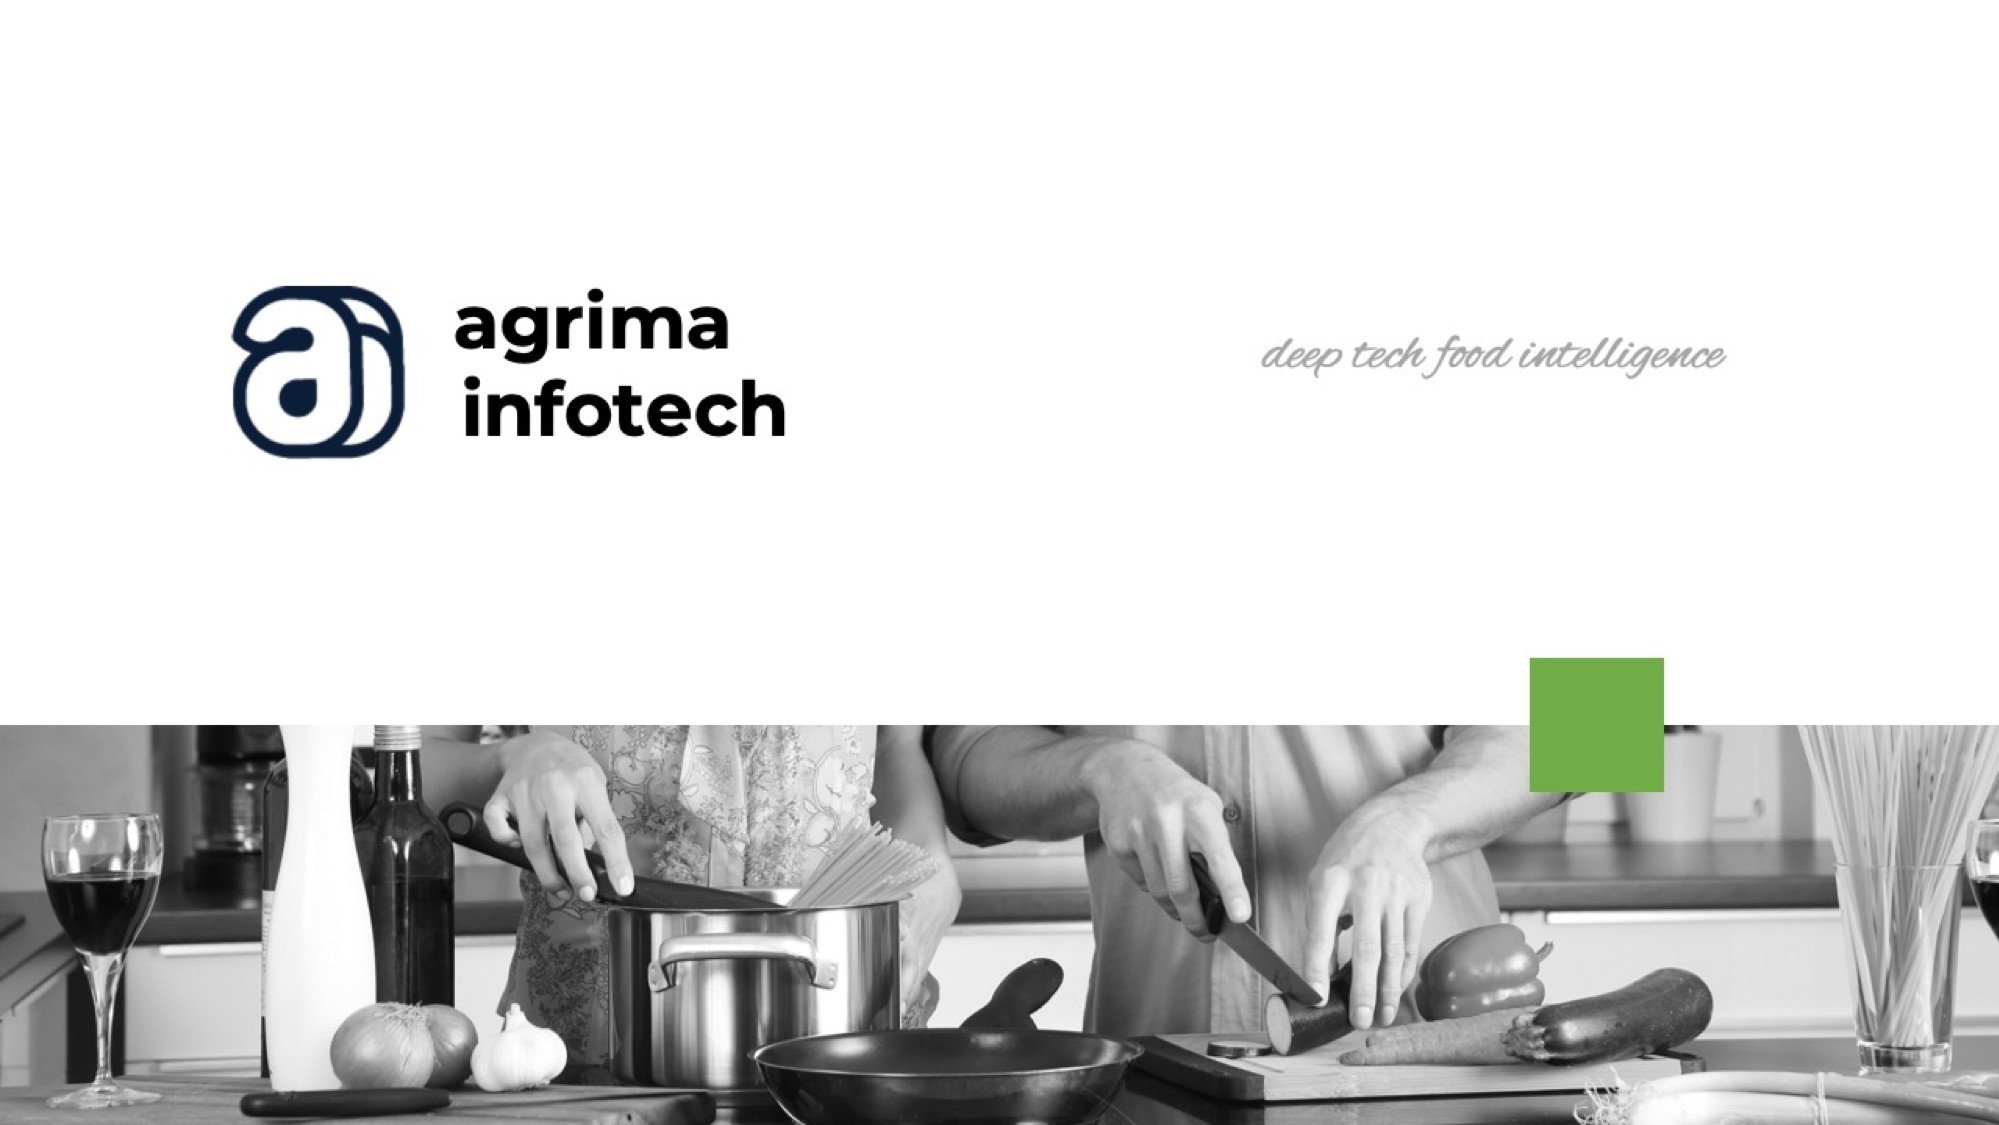 agrima infotech - acquired by bigbasket | linkedin